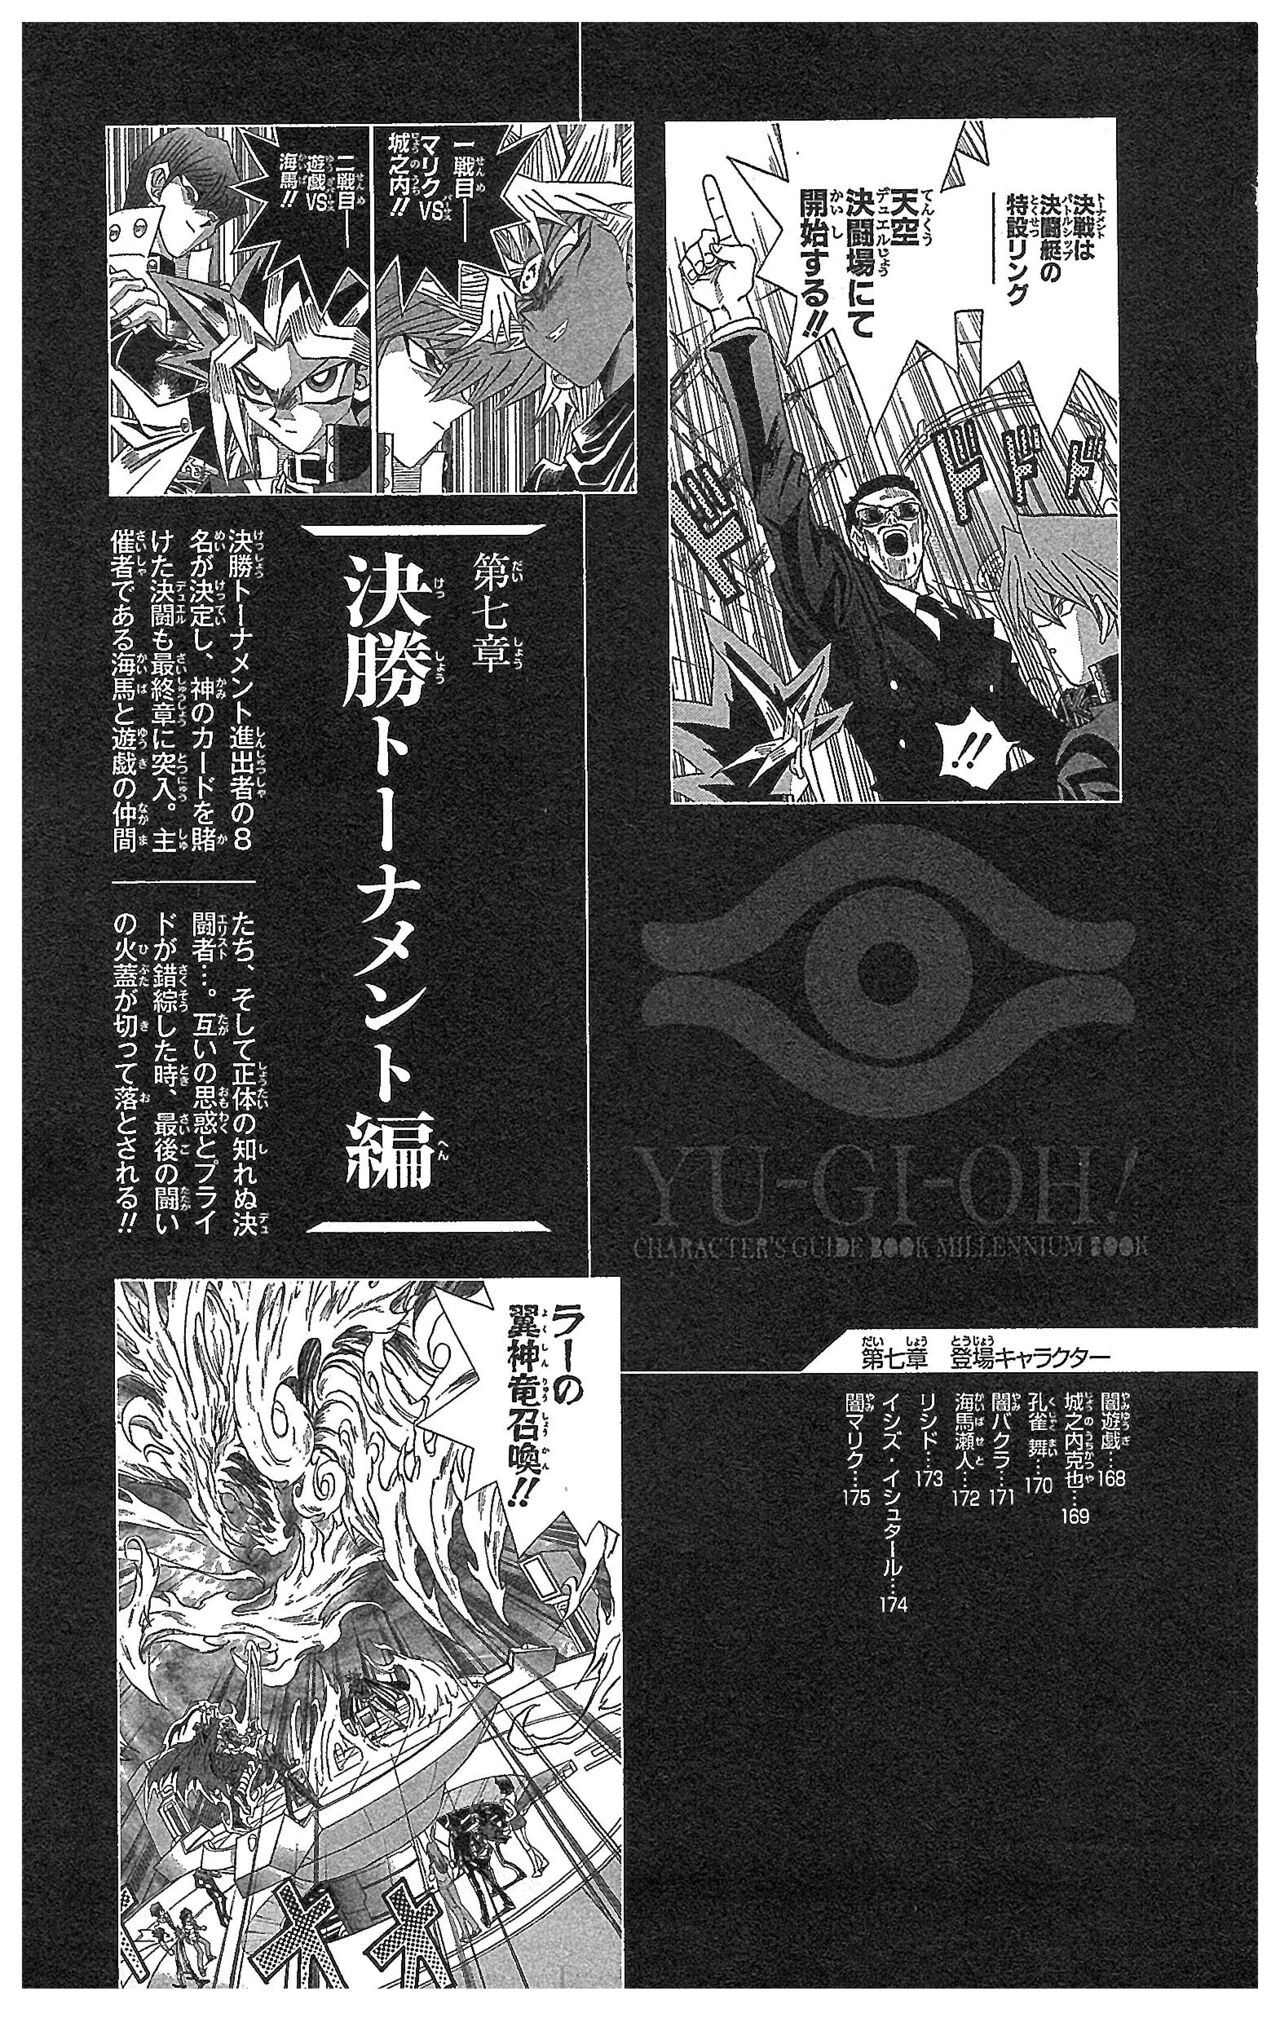 Yu-Gi-Oh! Character Guidebook: Millennium Book 159